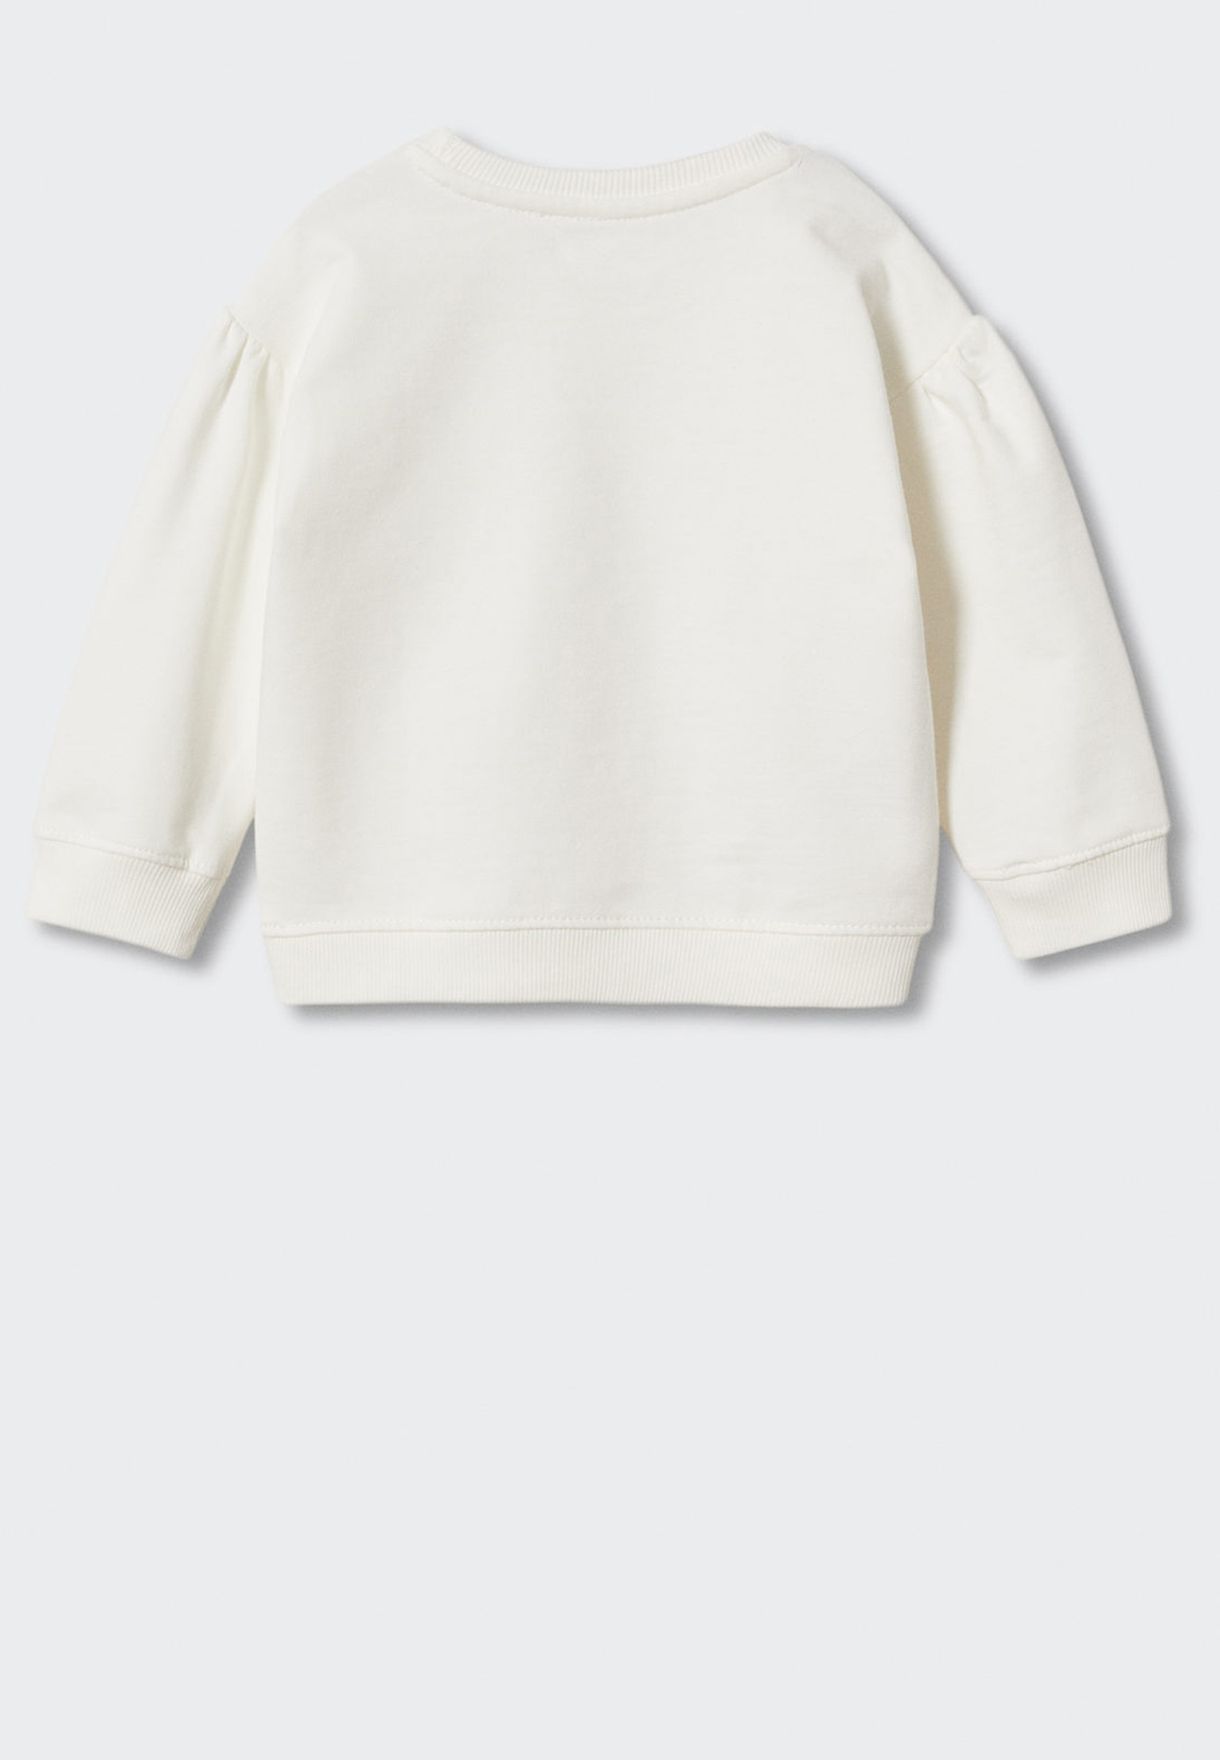 Infant Printed Sweatshirt